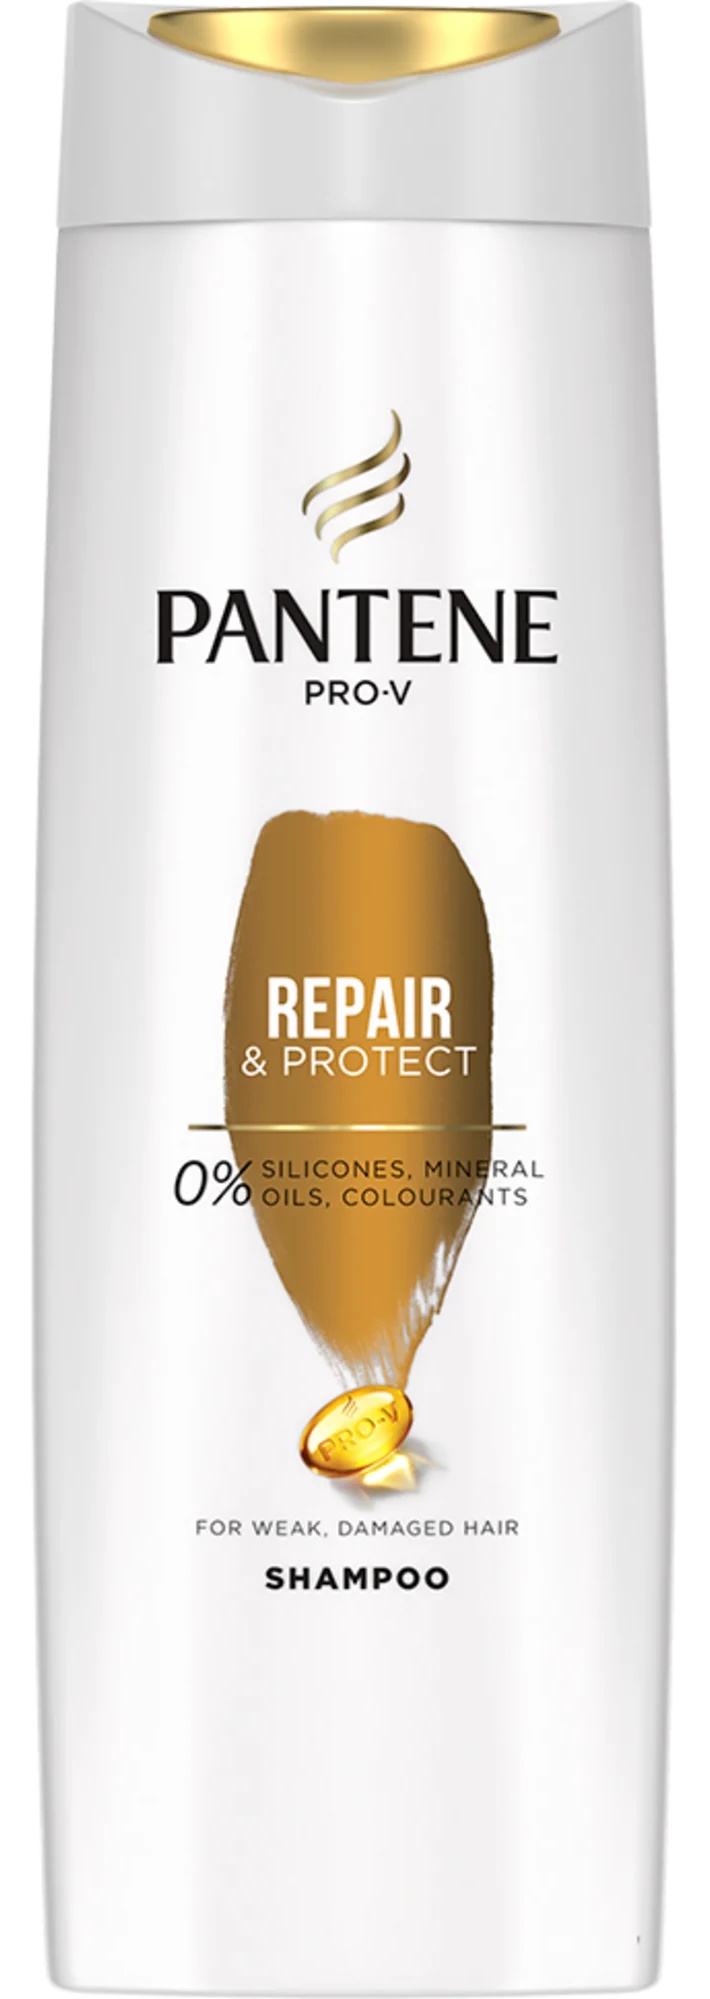 Pantene Pro-v Repair & Protect Shampoo For Damaged Hair